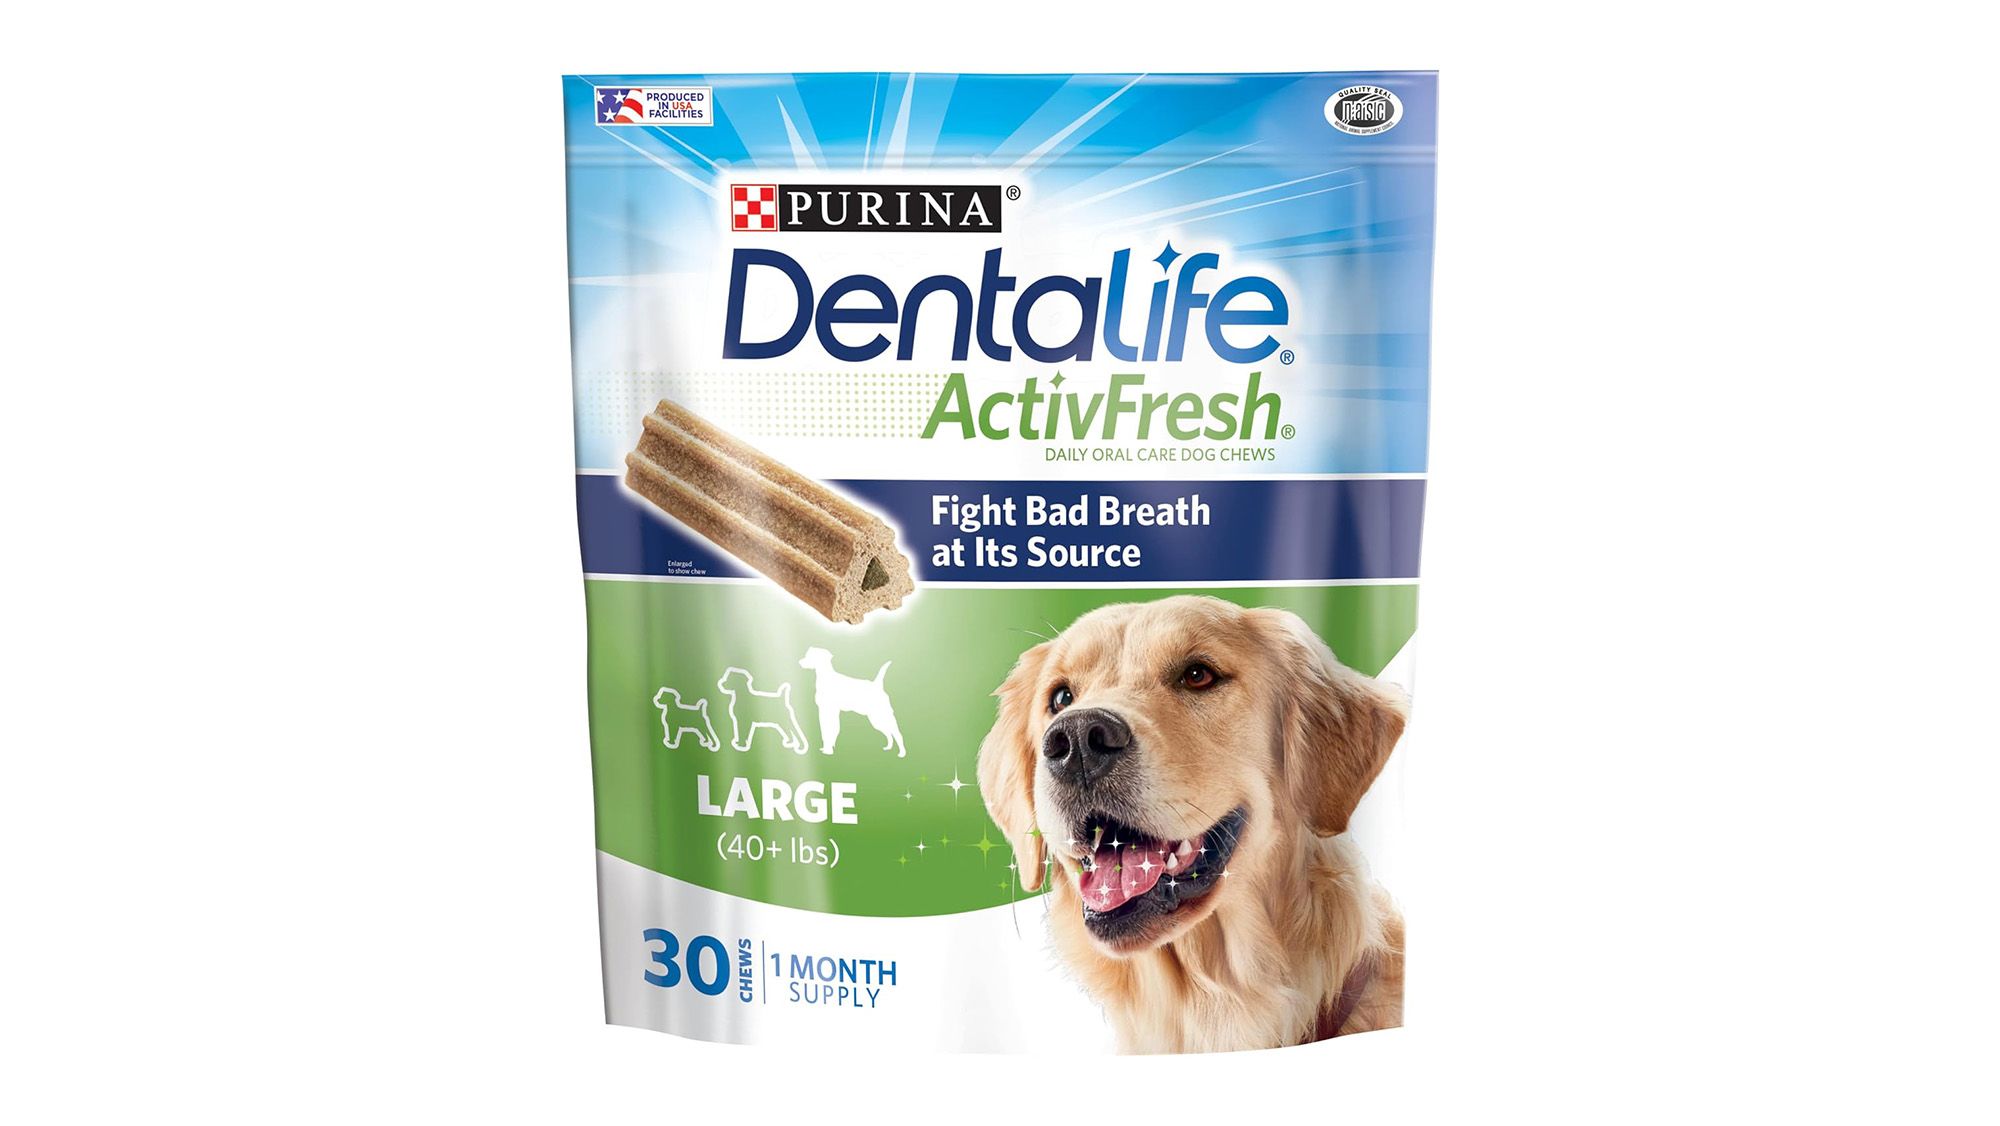 https://media.cnn.com/api/v1/images/stellar/prod/dentalife-purina-dentalife-large-dog-dental-chews-product-card-cnnu.jpg?c=original